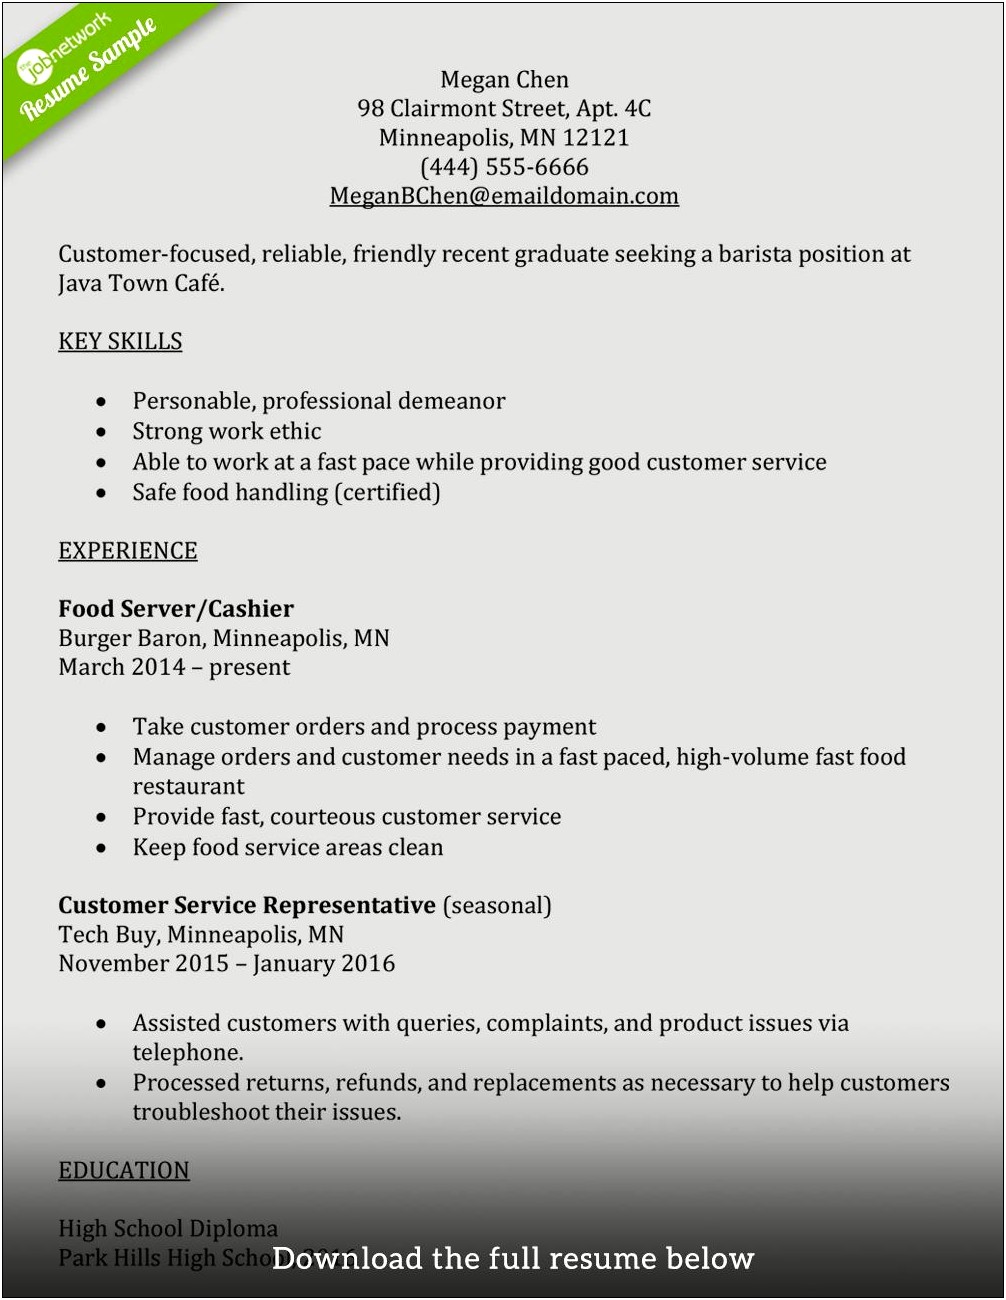 Resume Writing Services Job Description